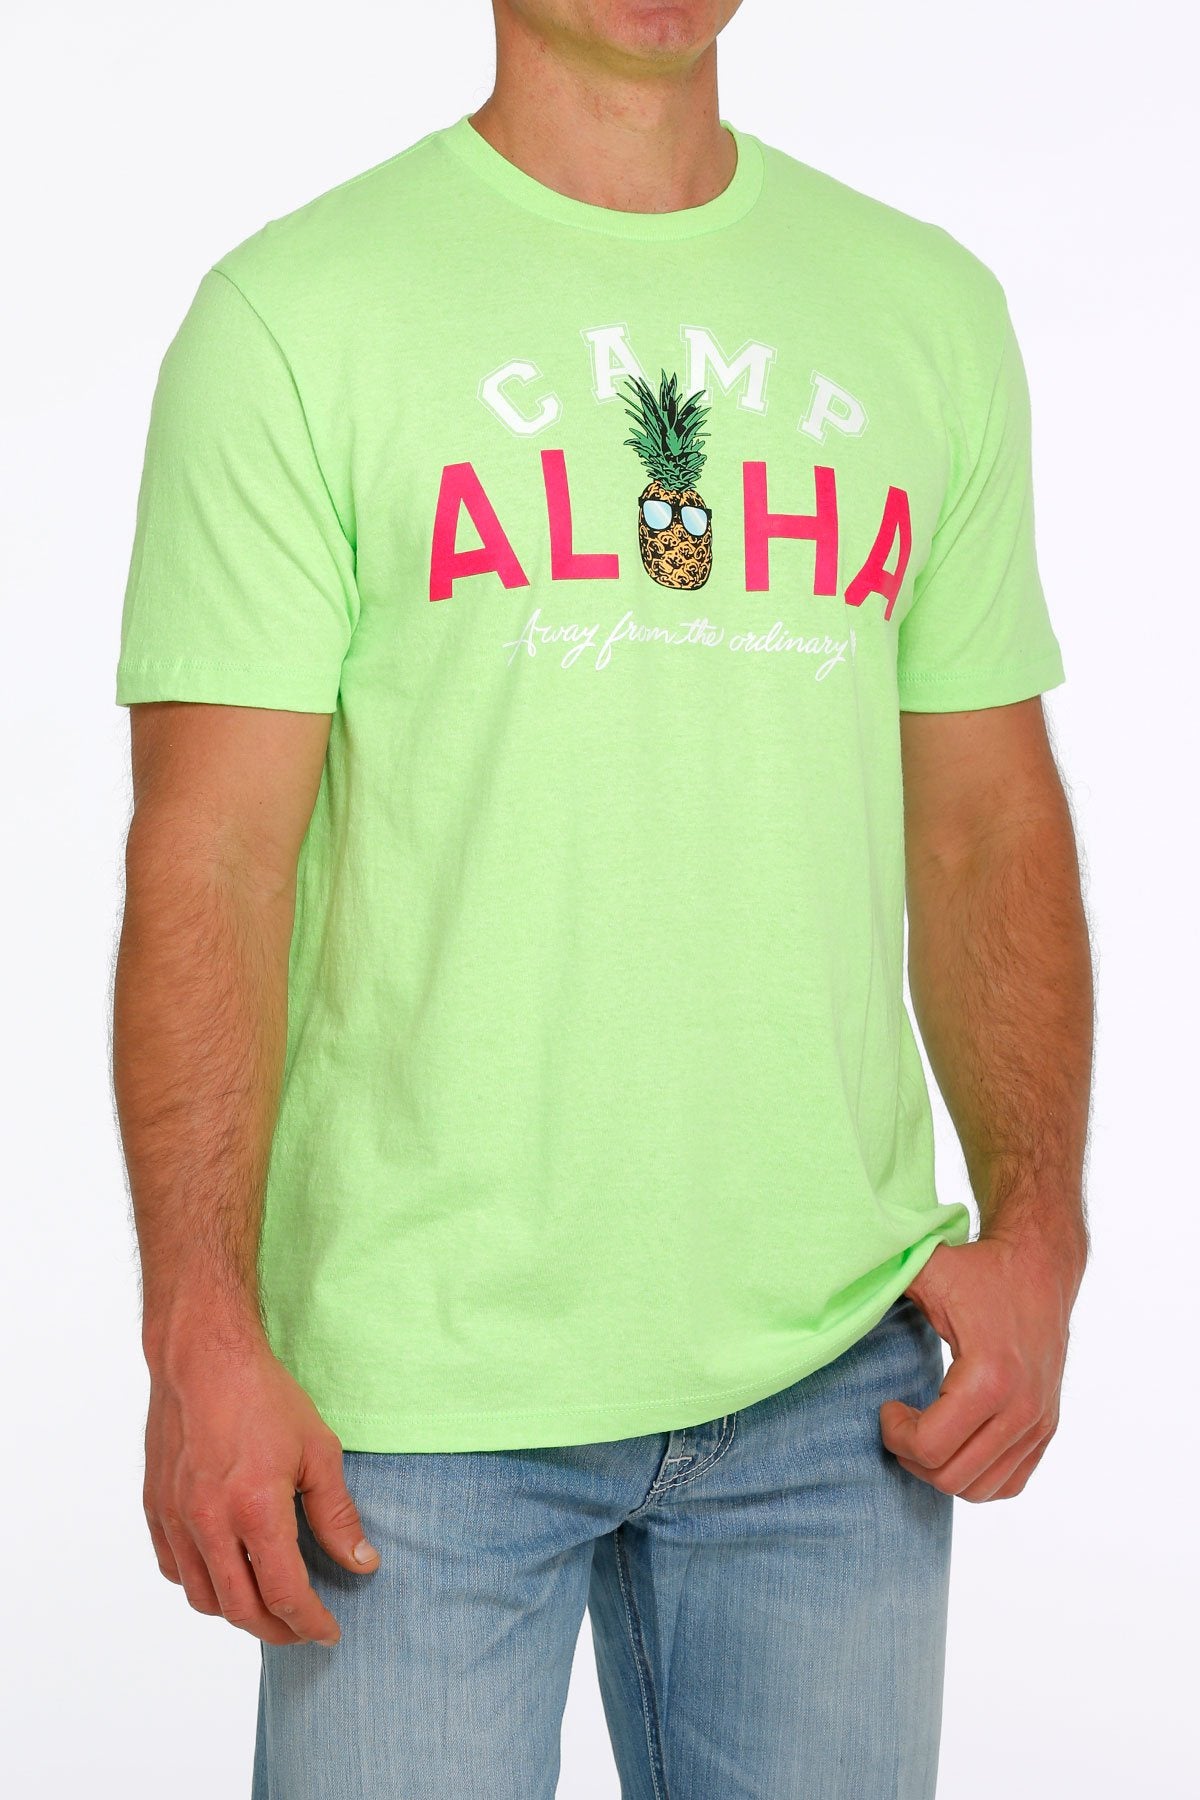 Mens Cinch Camp Aloha Pineapple Tee Tshirt - Neon Mint (6809262981197)